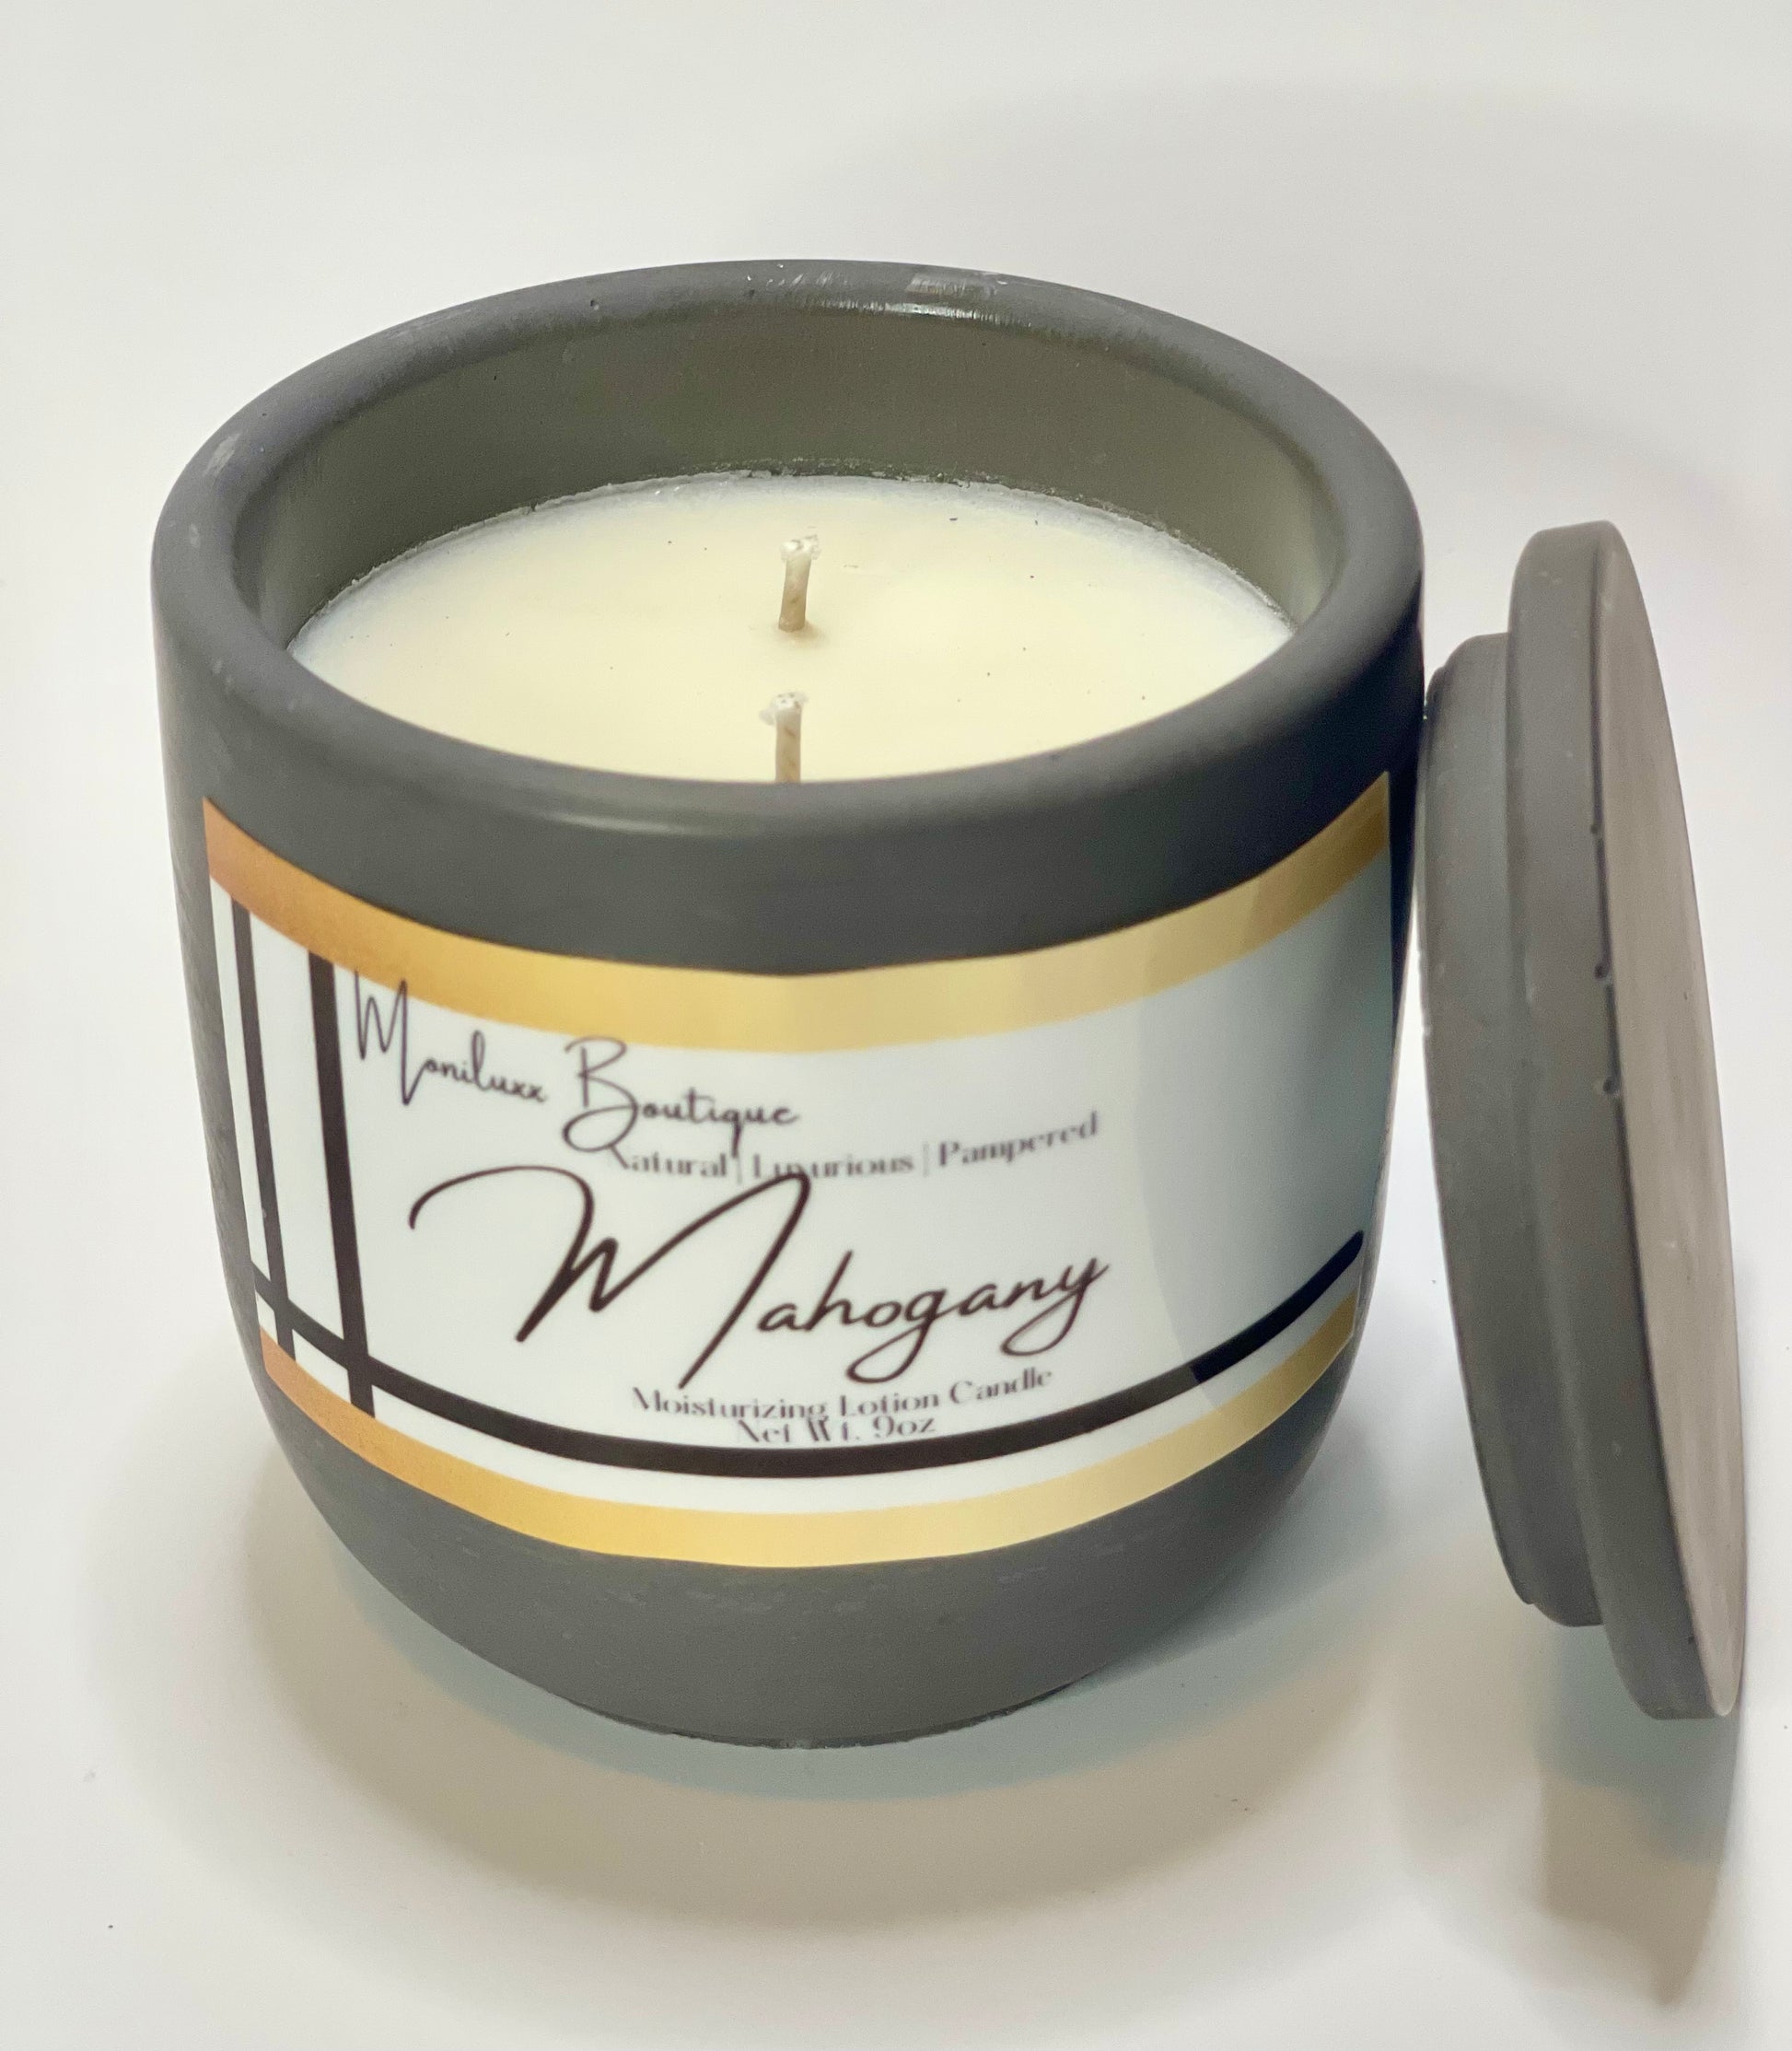 Lotion Candle | Mahogany - Moniluxx Boutique